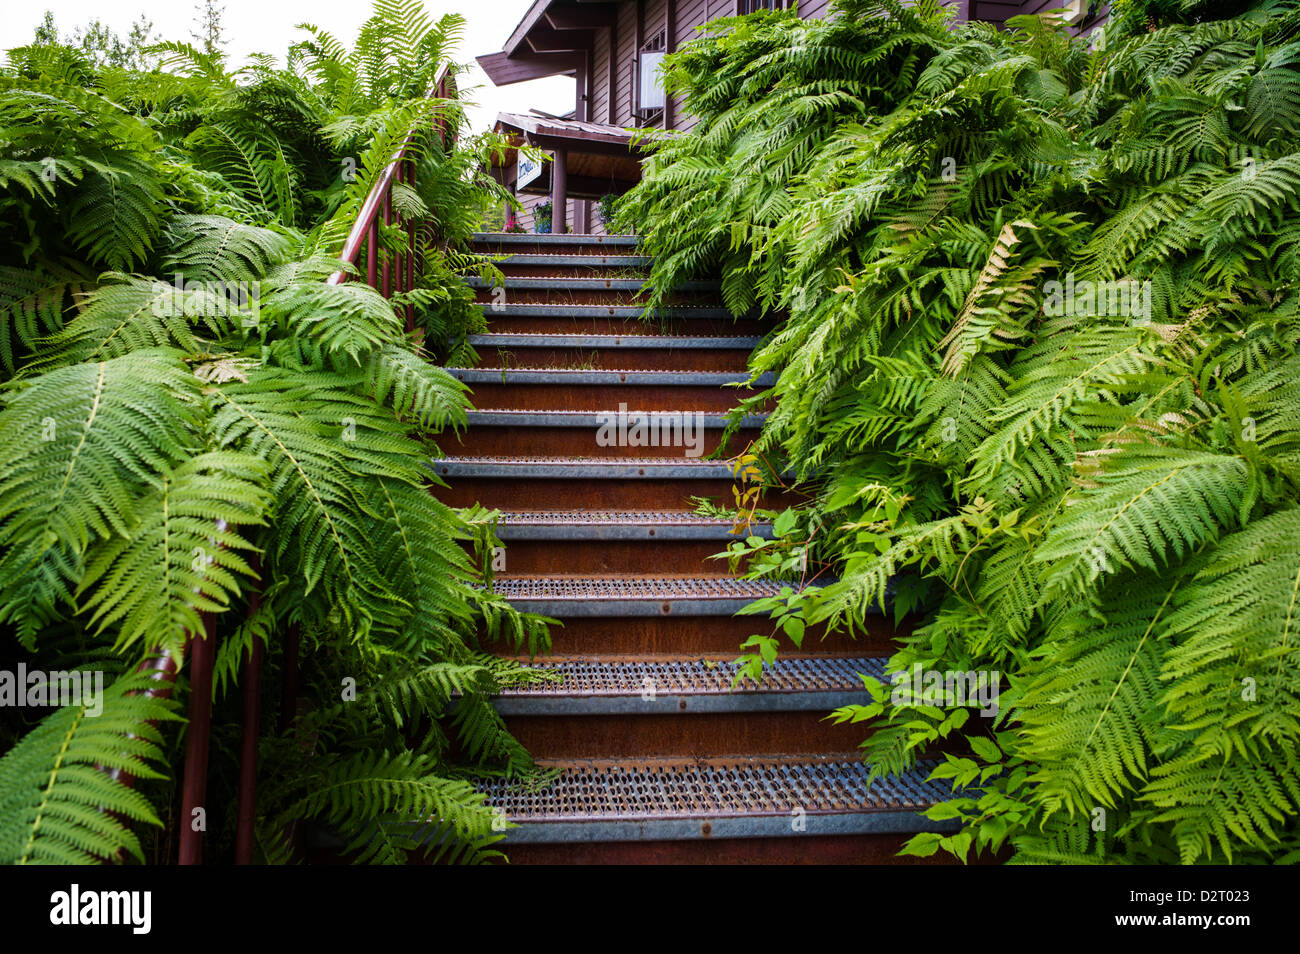 Escaliers overgreen avec jardin verdoyant de fougères, vue d'été de Aleyaska Resort & Ski Area, Aleyaska, Alaska, USA Banque D'Images